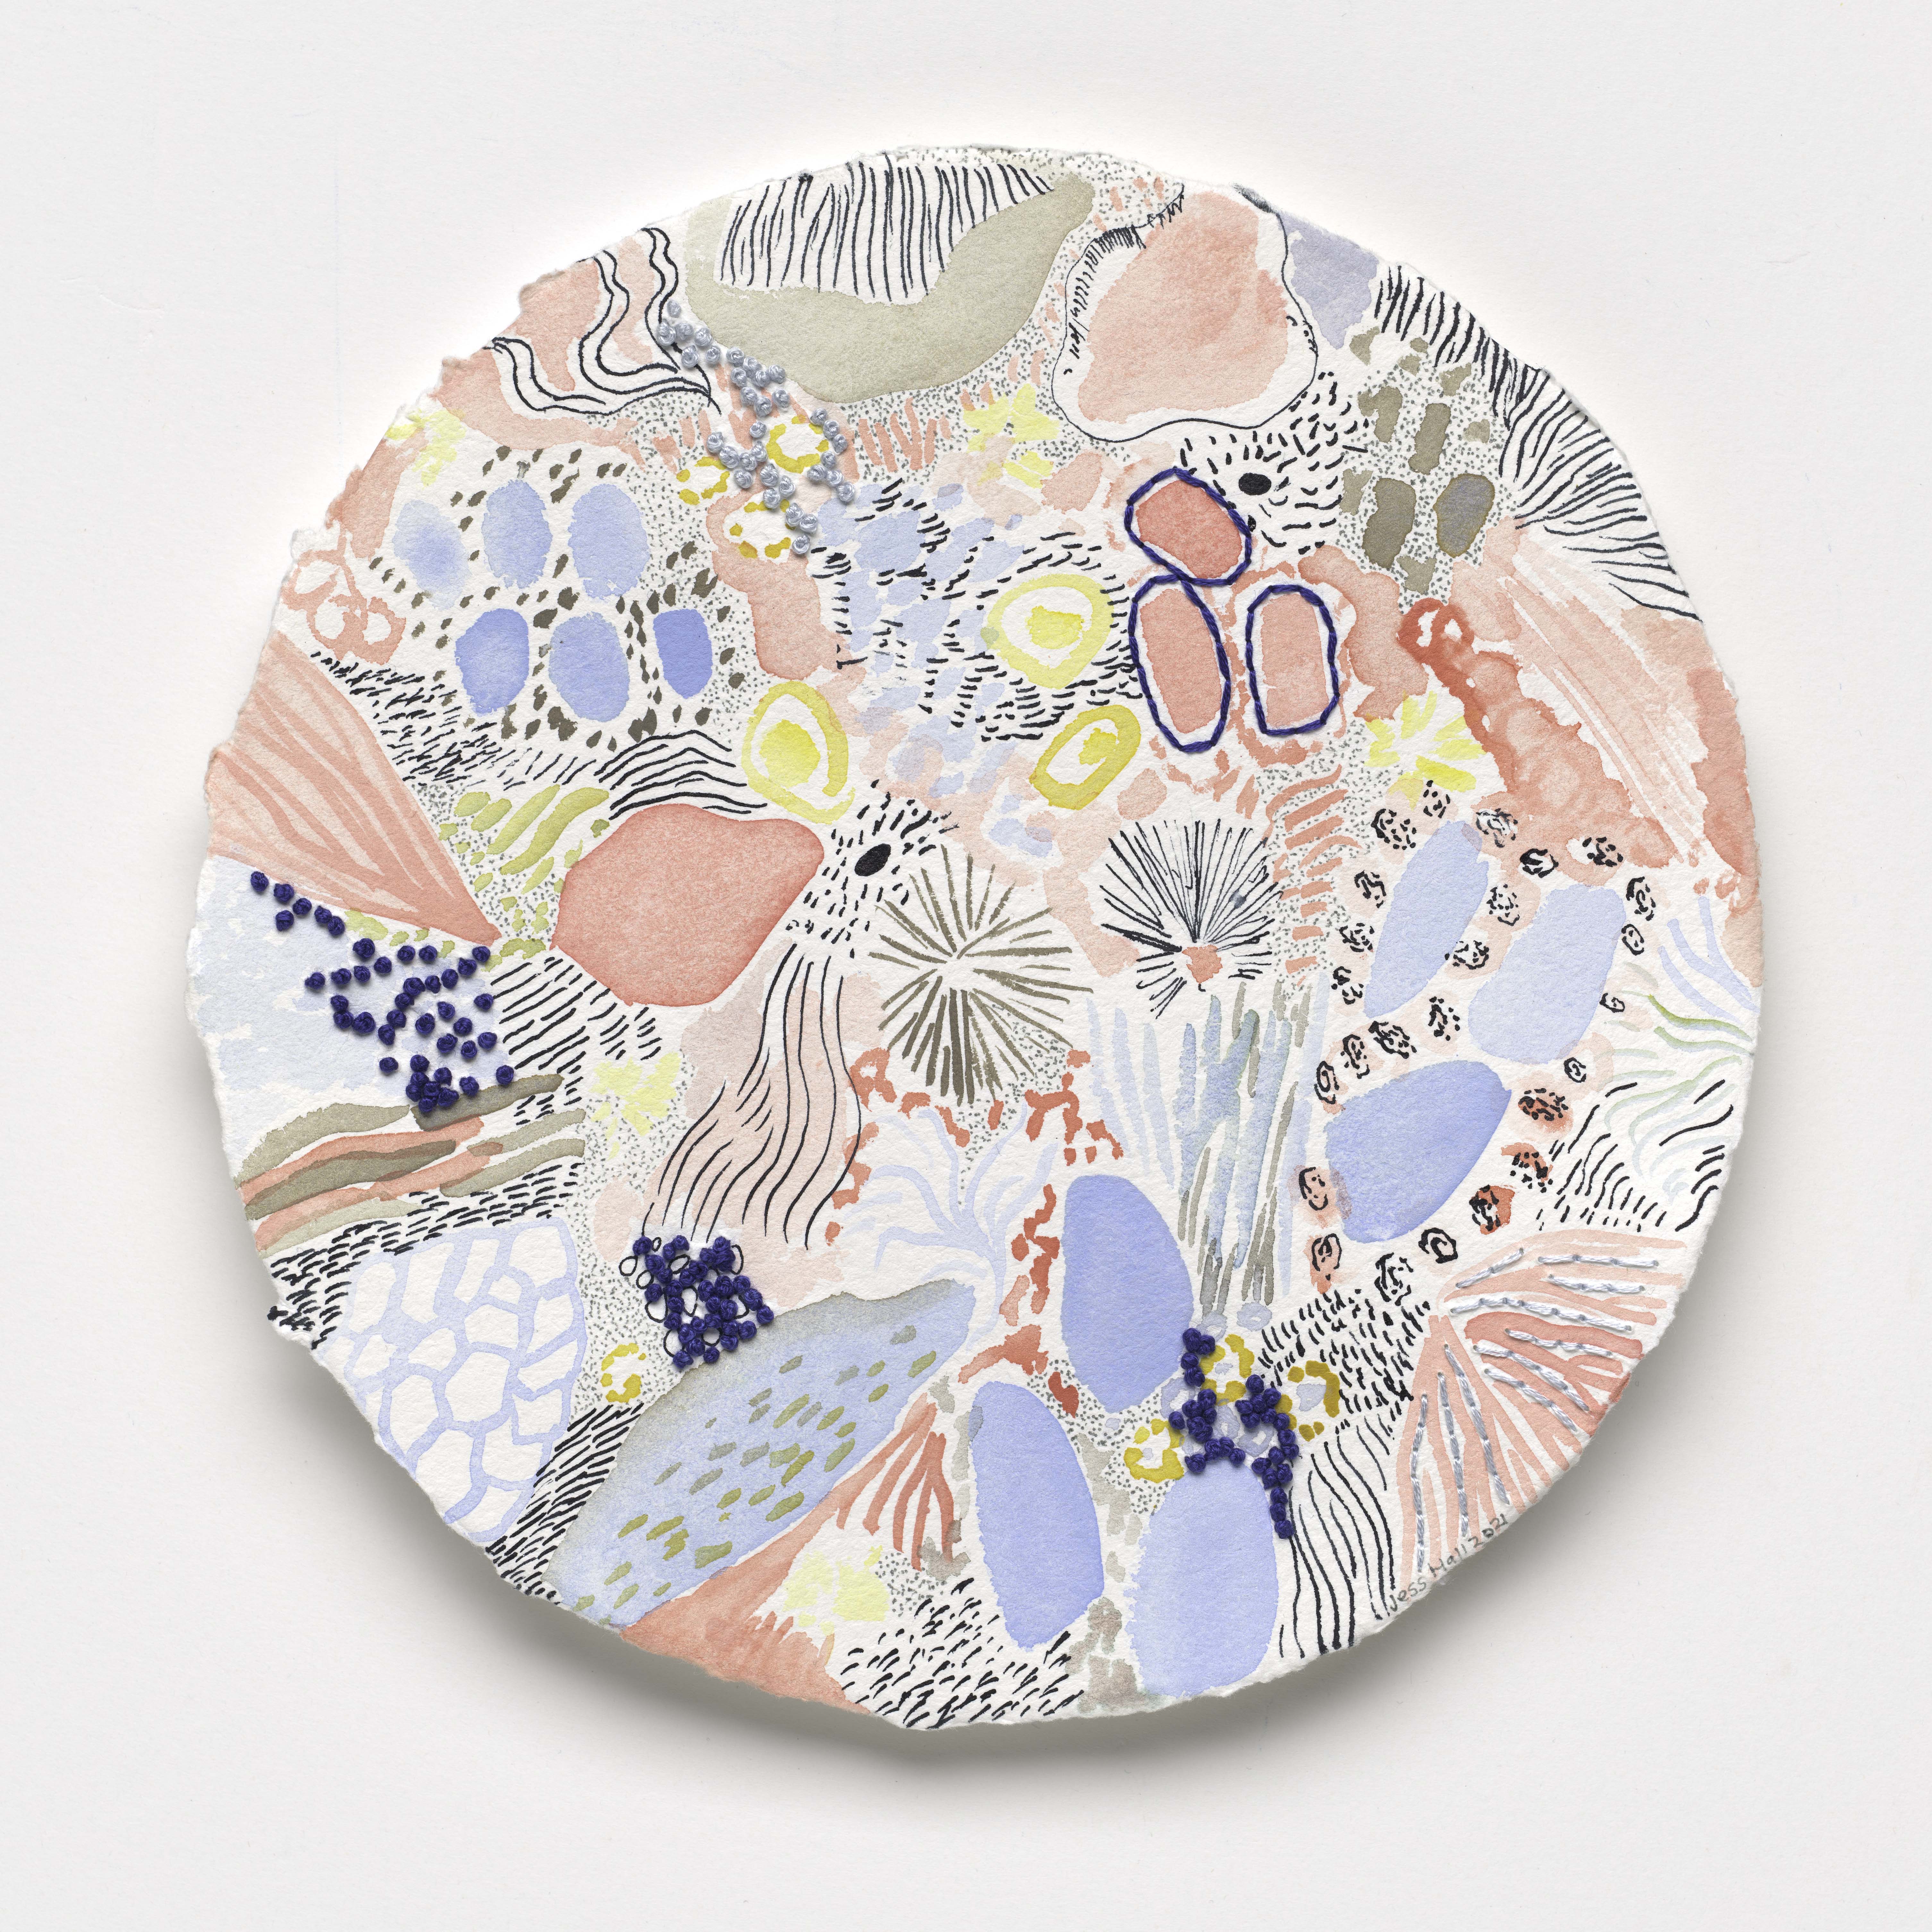 Fungi Pattern Landscape  by Jess Hall | Lethbridge 20000 2022 Finalists | Lethbridge Gallery